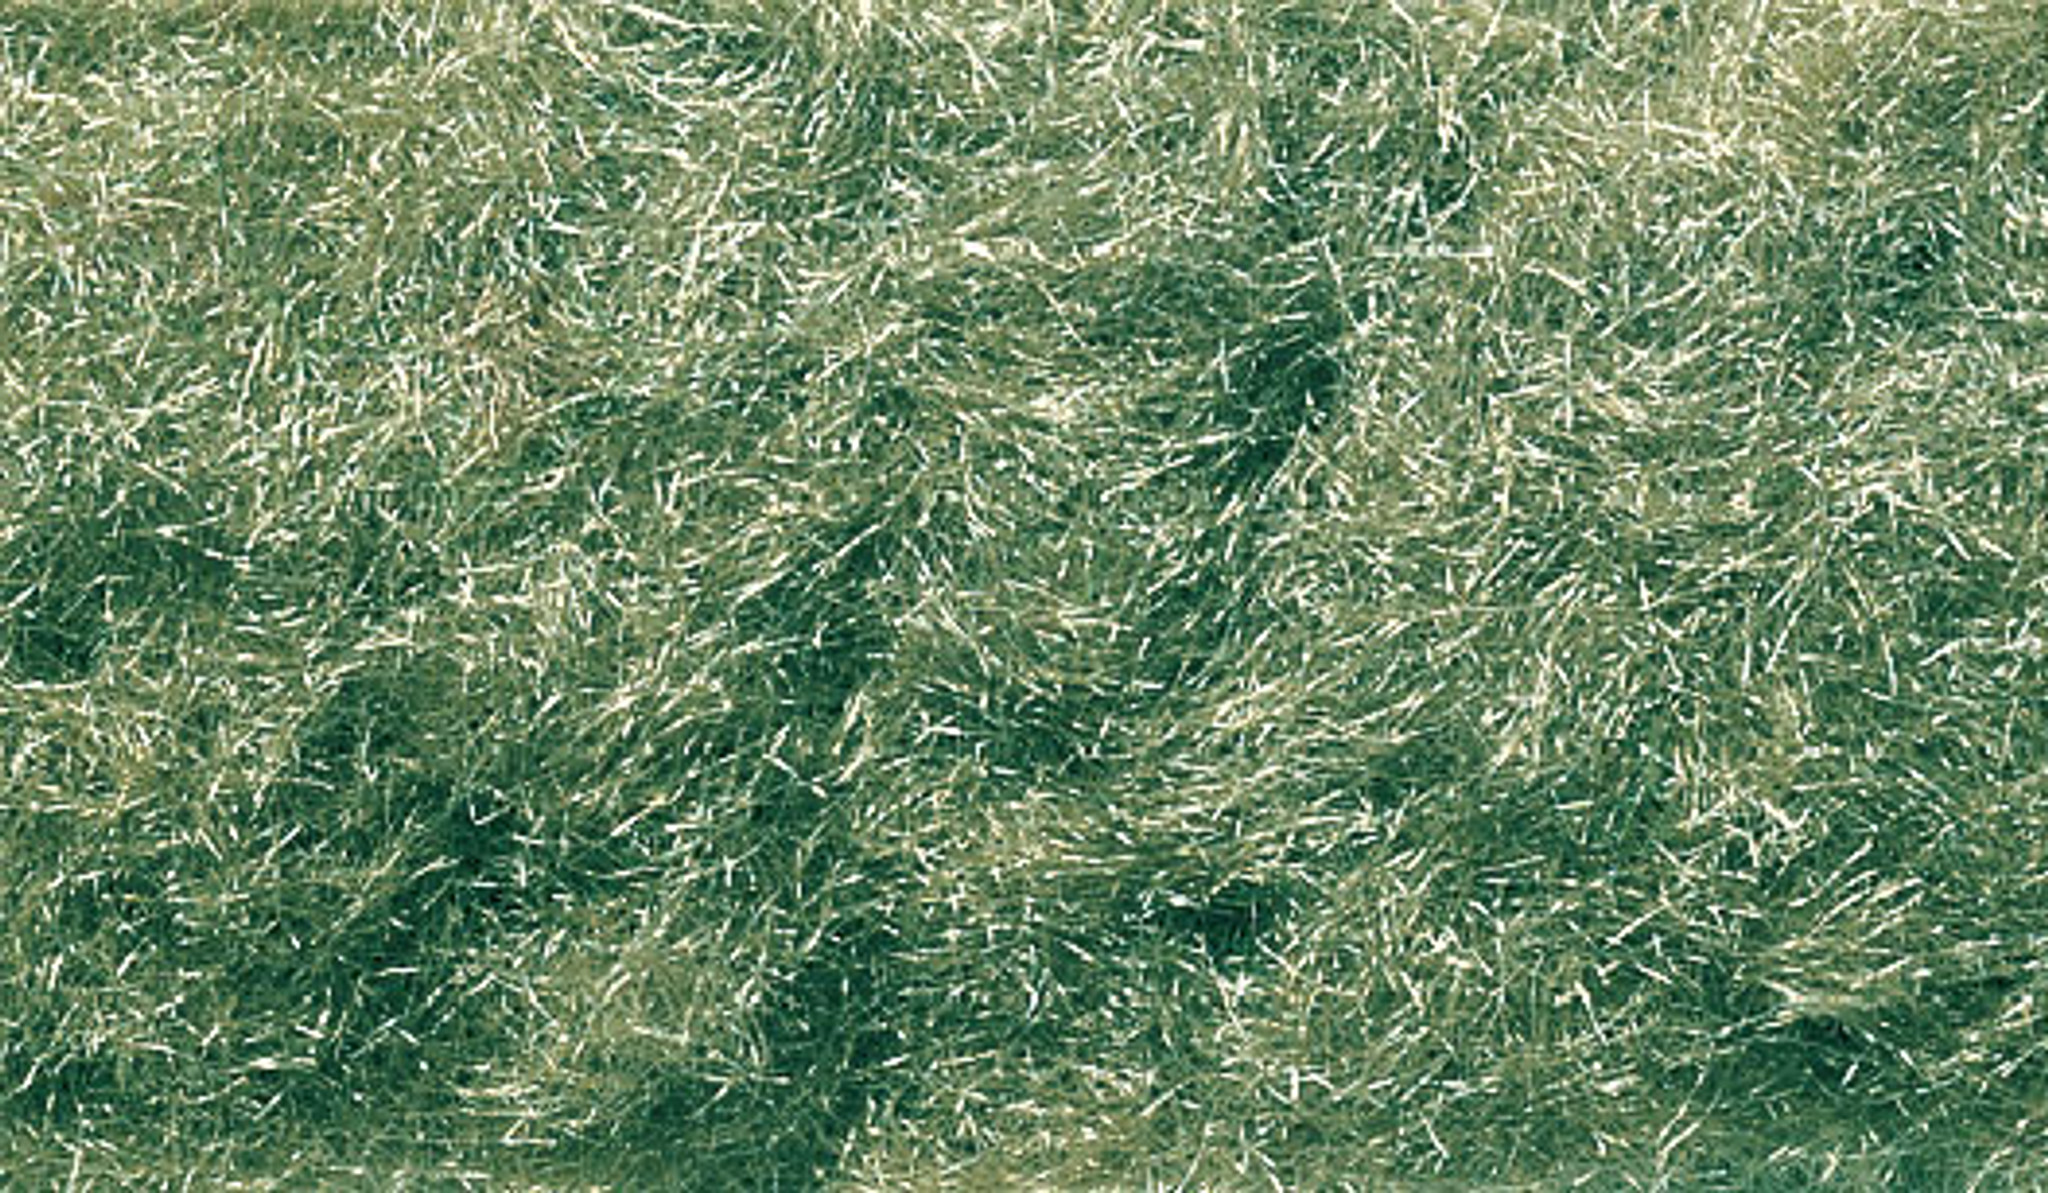 1mm Static Grass